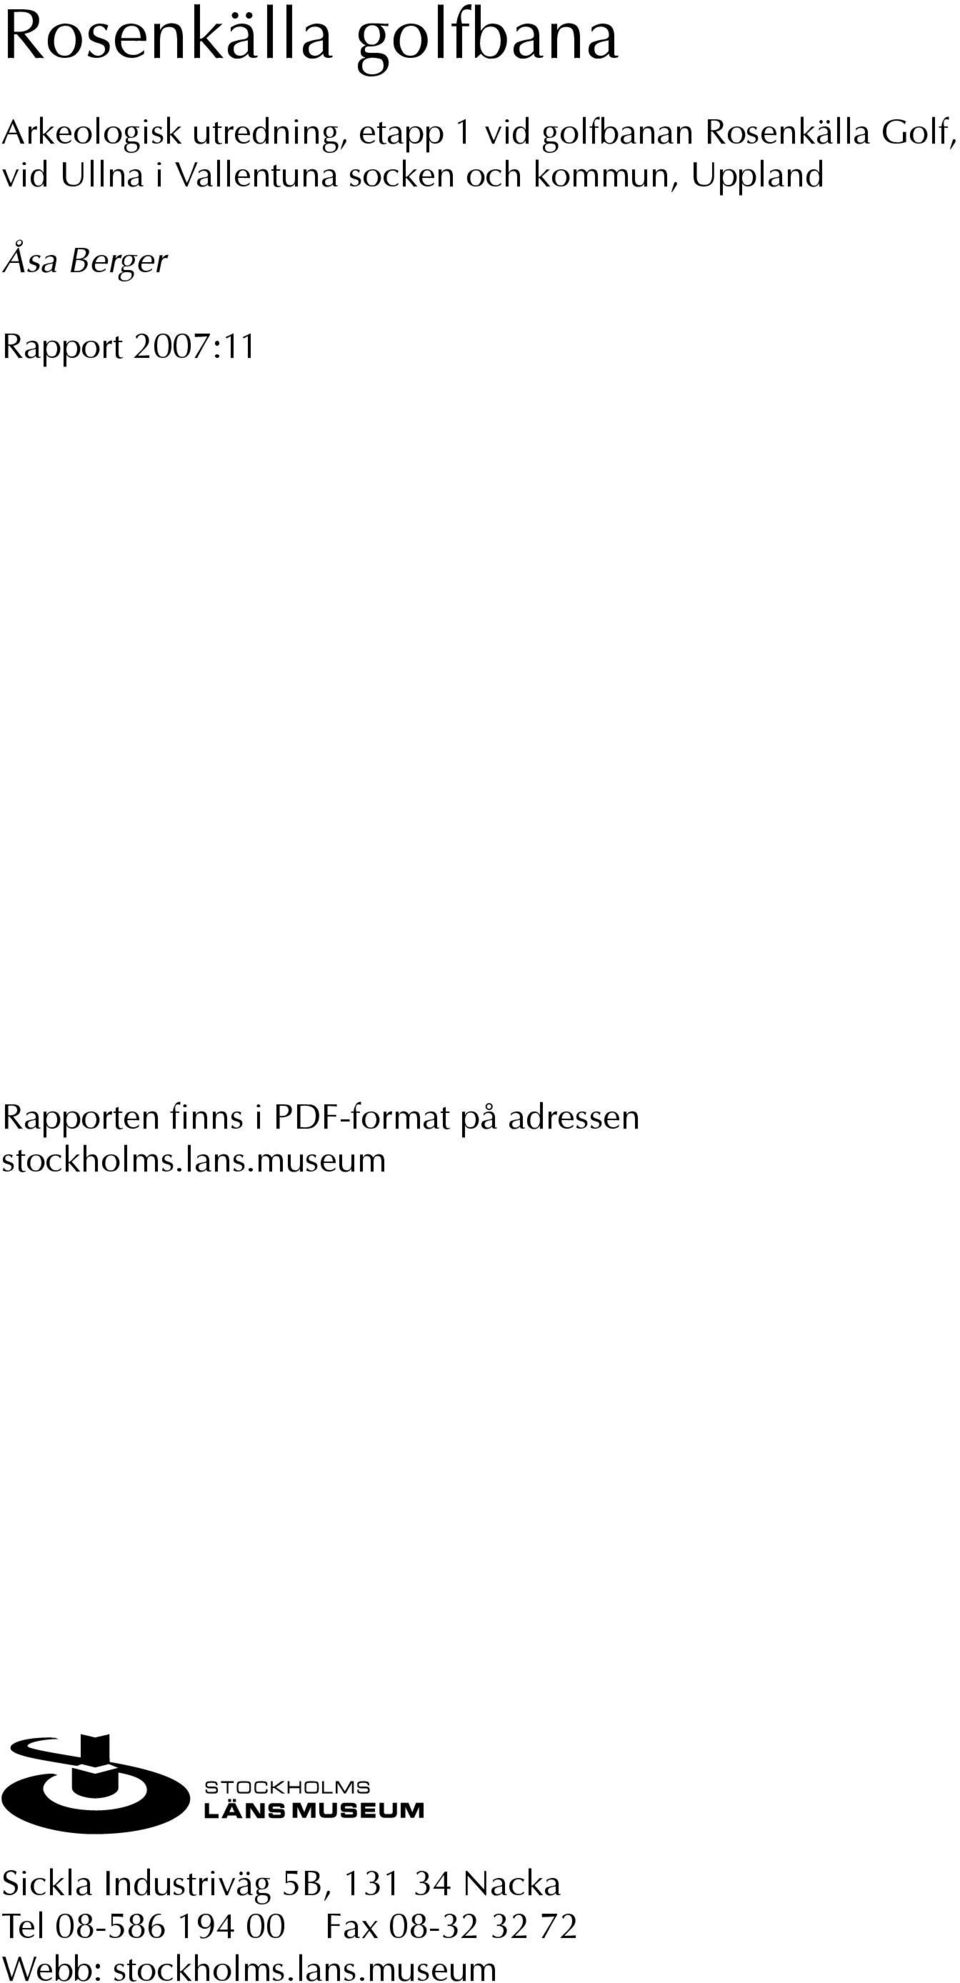 2007:11 Rapporten finns i PDF-format på adressen stockholms.lans.